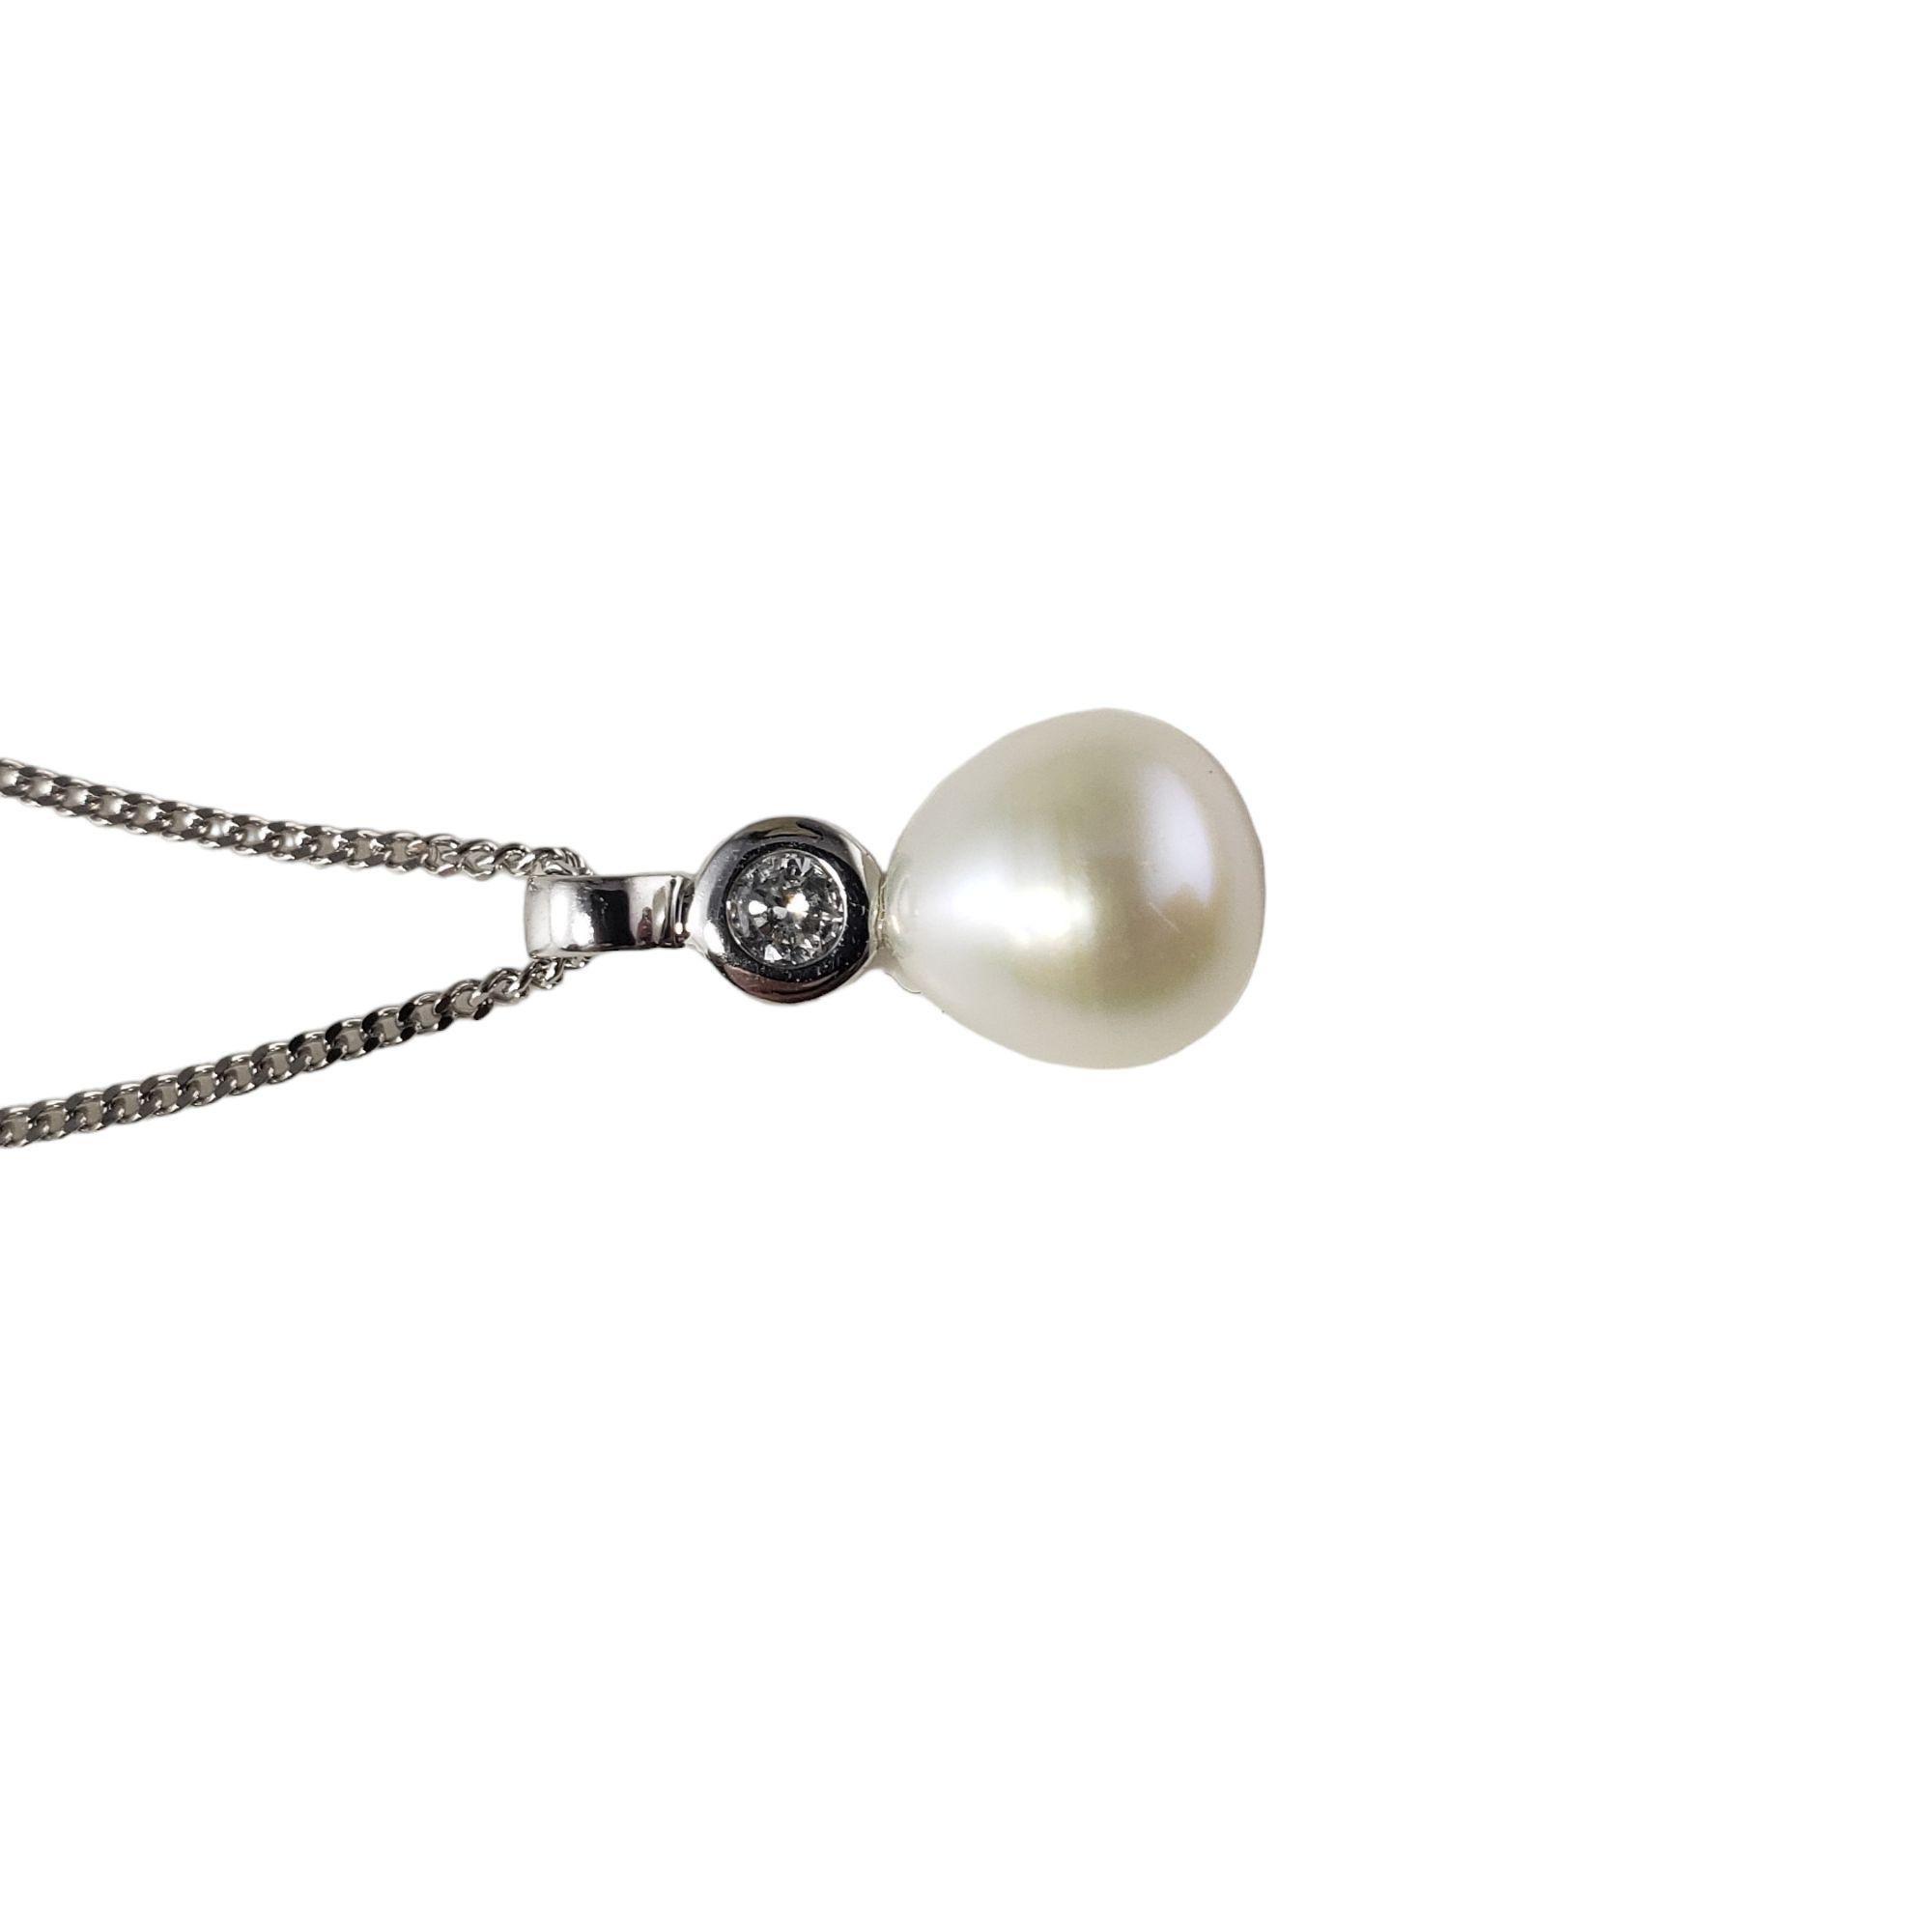 Brilliant Cut 9 Karat White Gold Pearl and Diamond Pendant Necklace #14450 For Sale